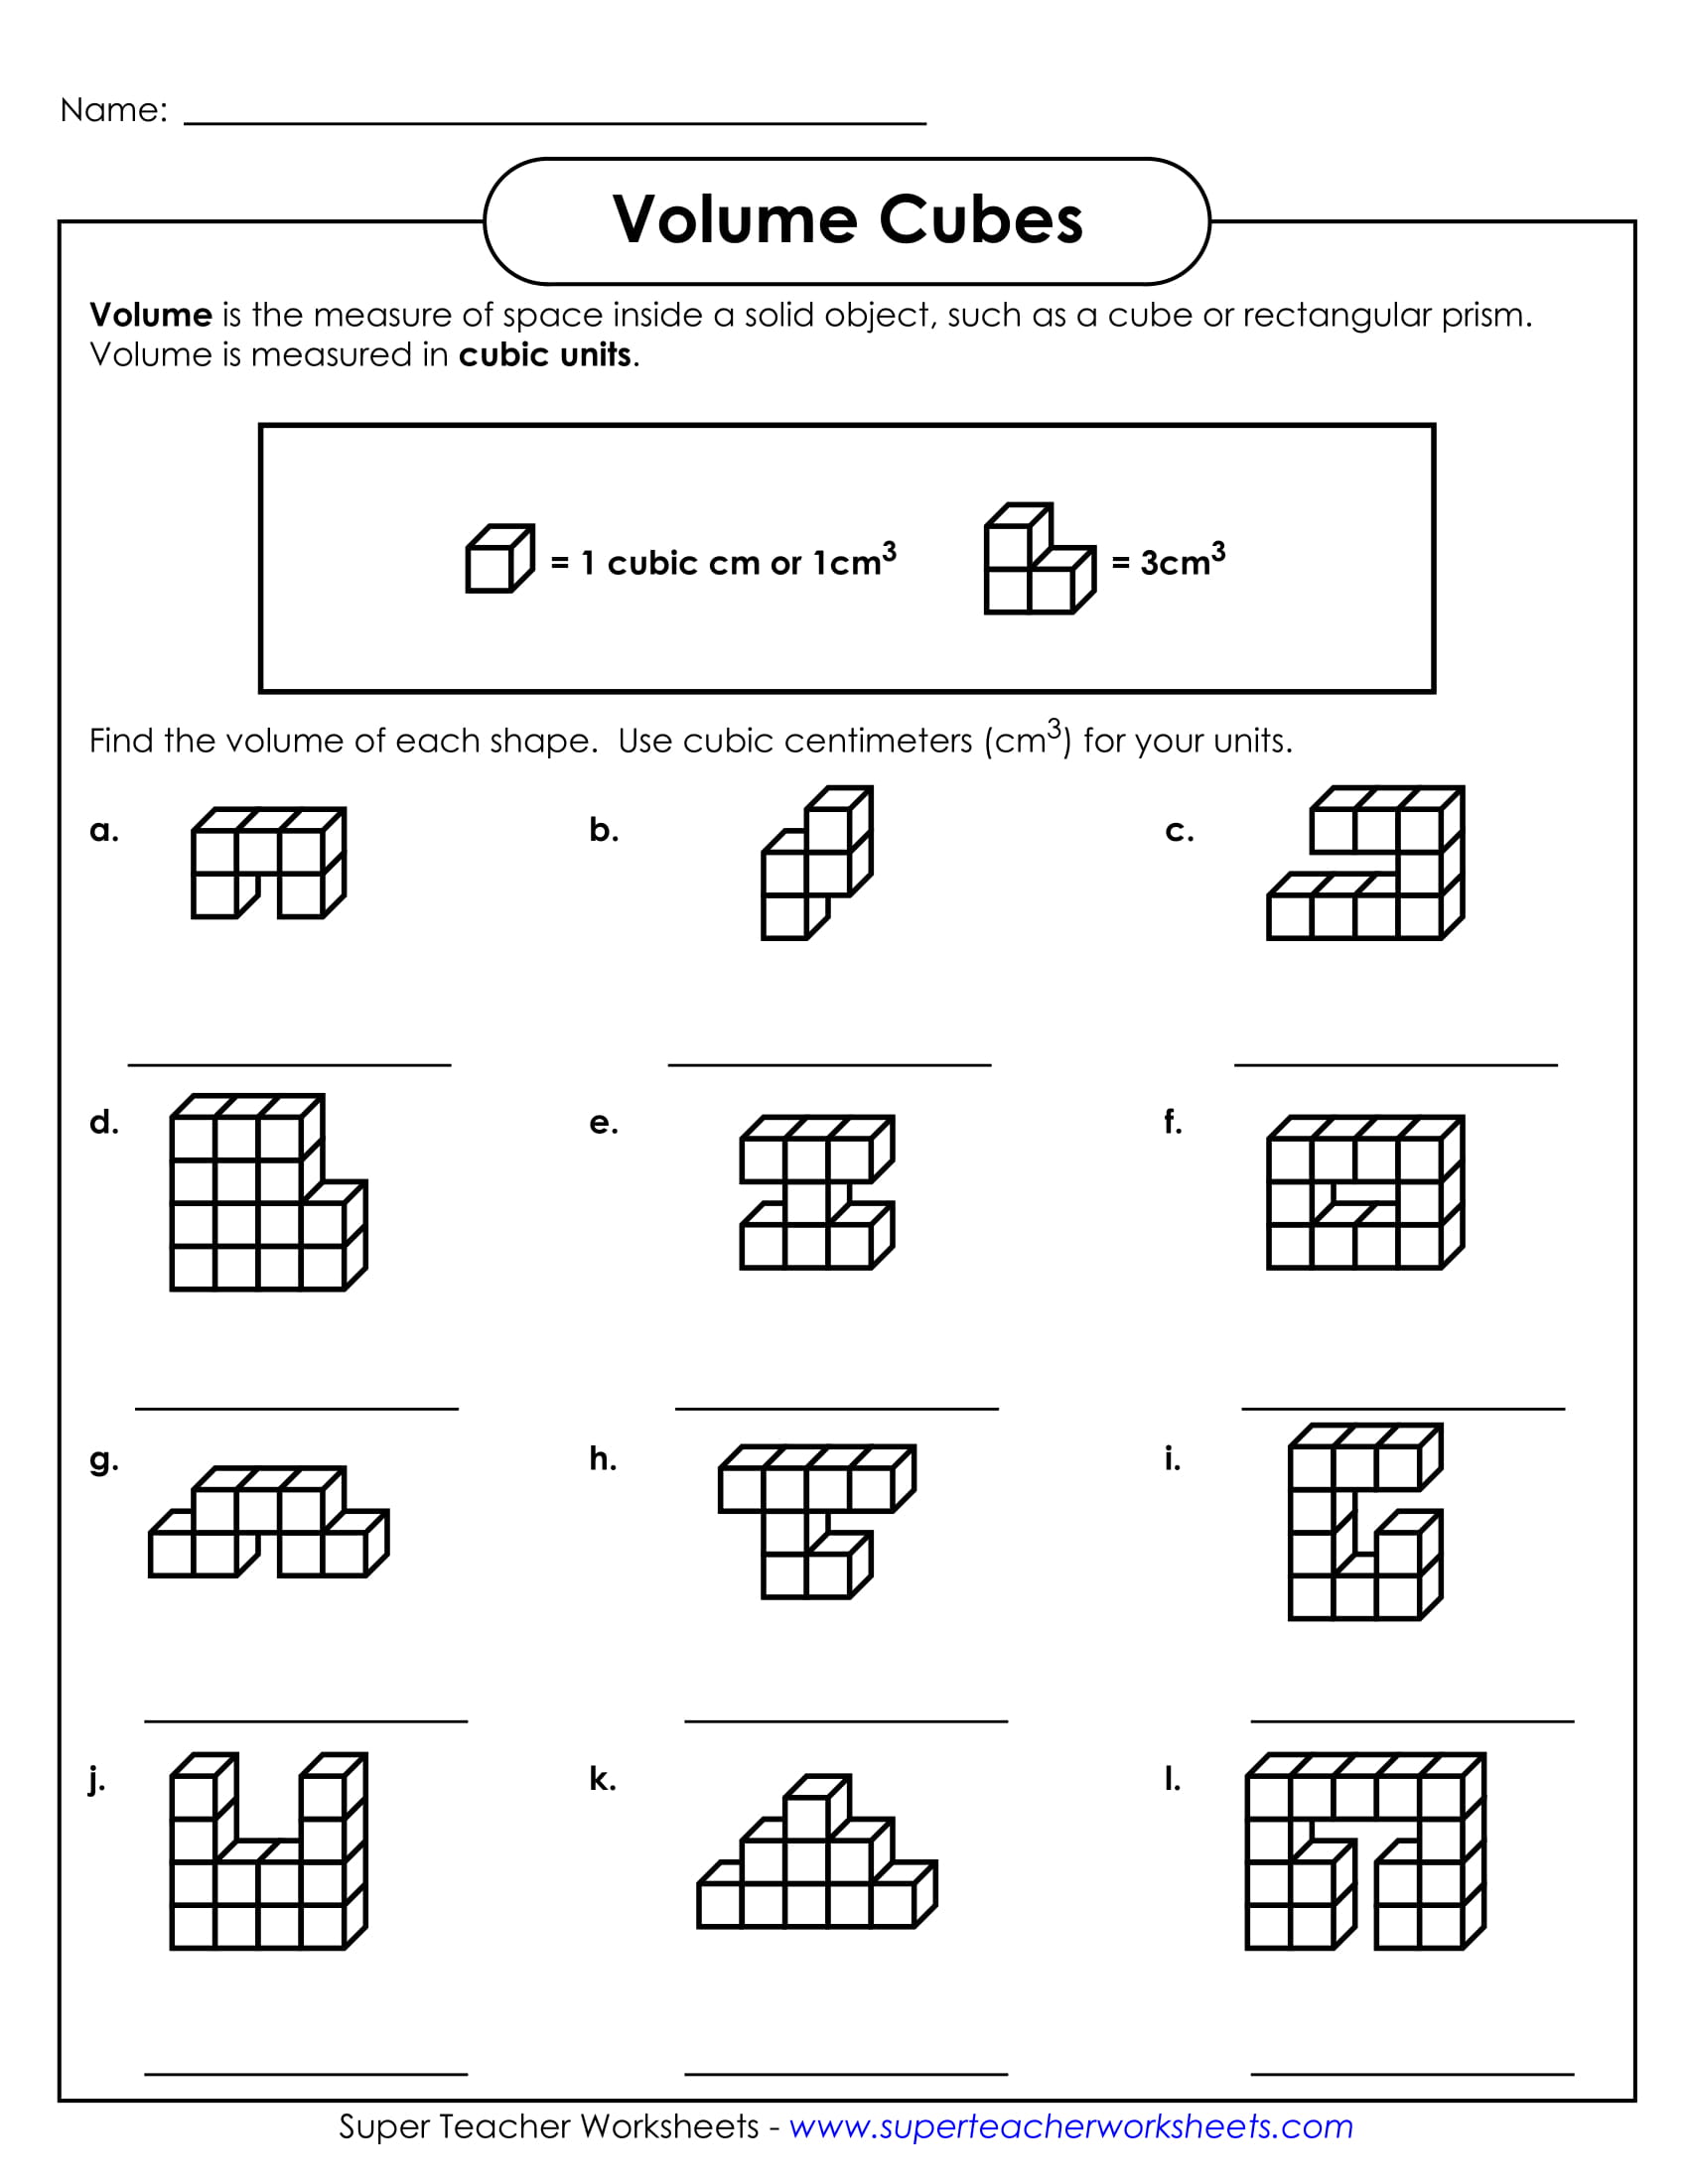 Volume Of Cube Worksheet